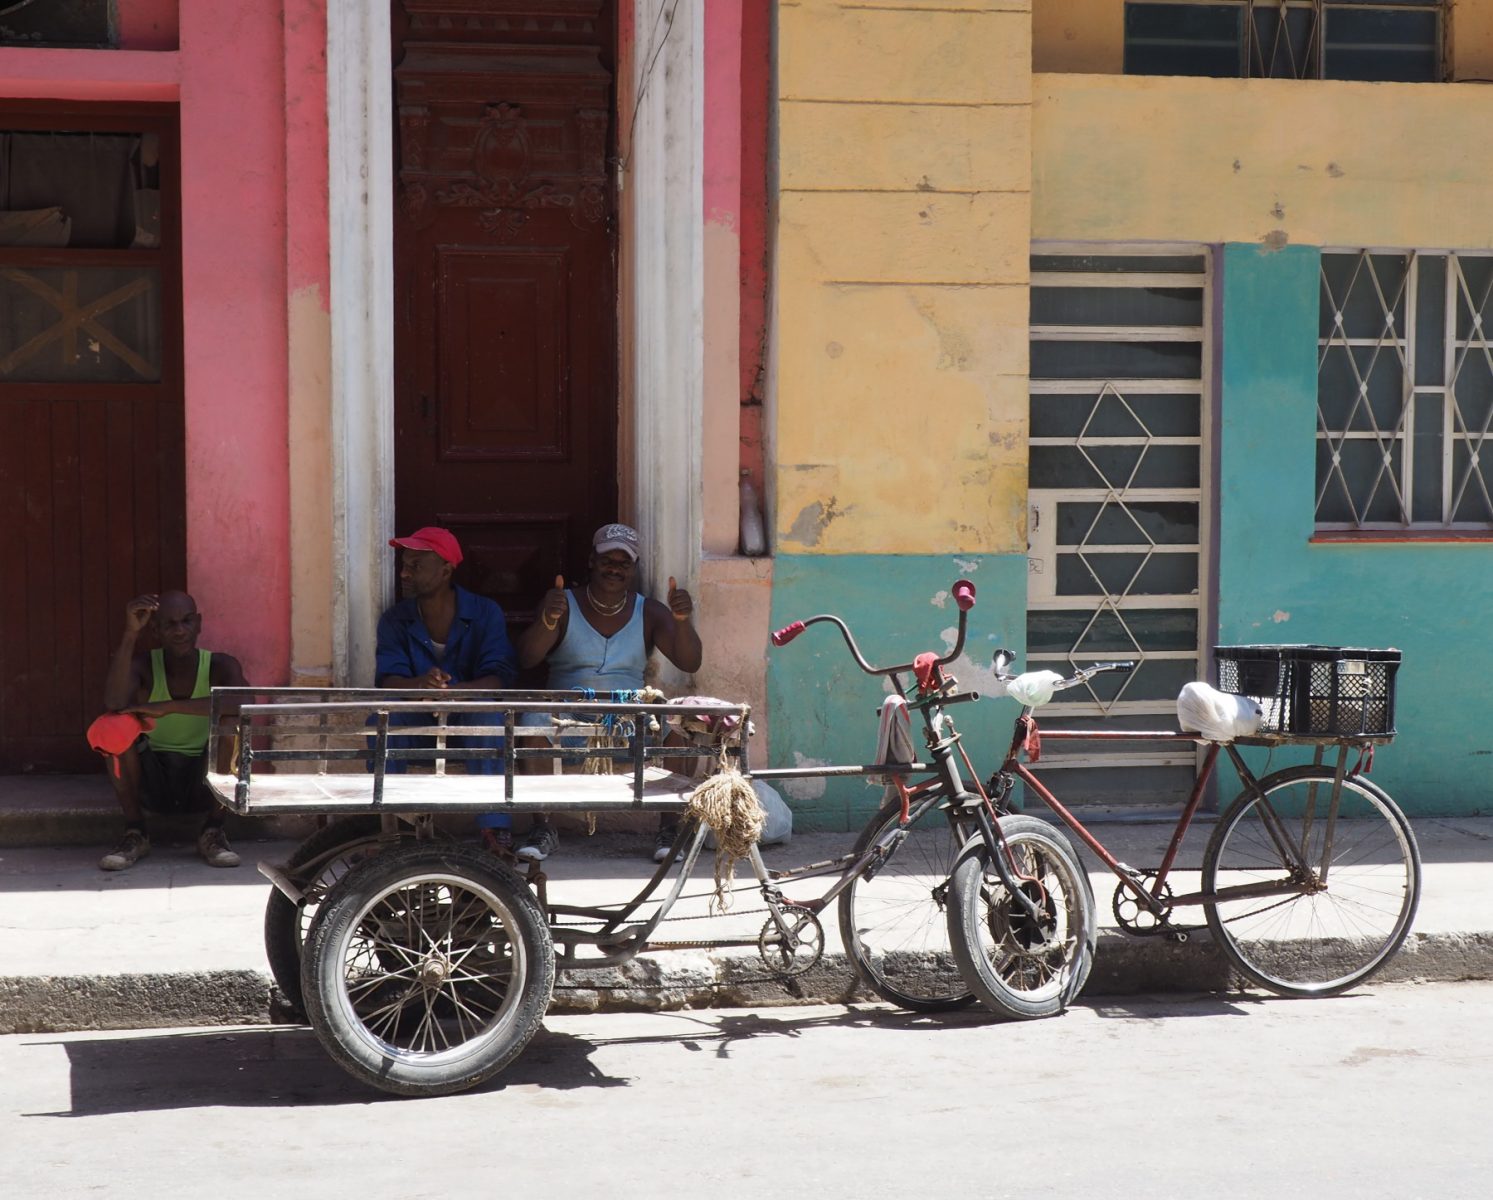 freindly Cubans in Havana